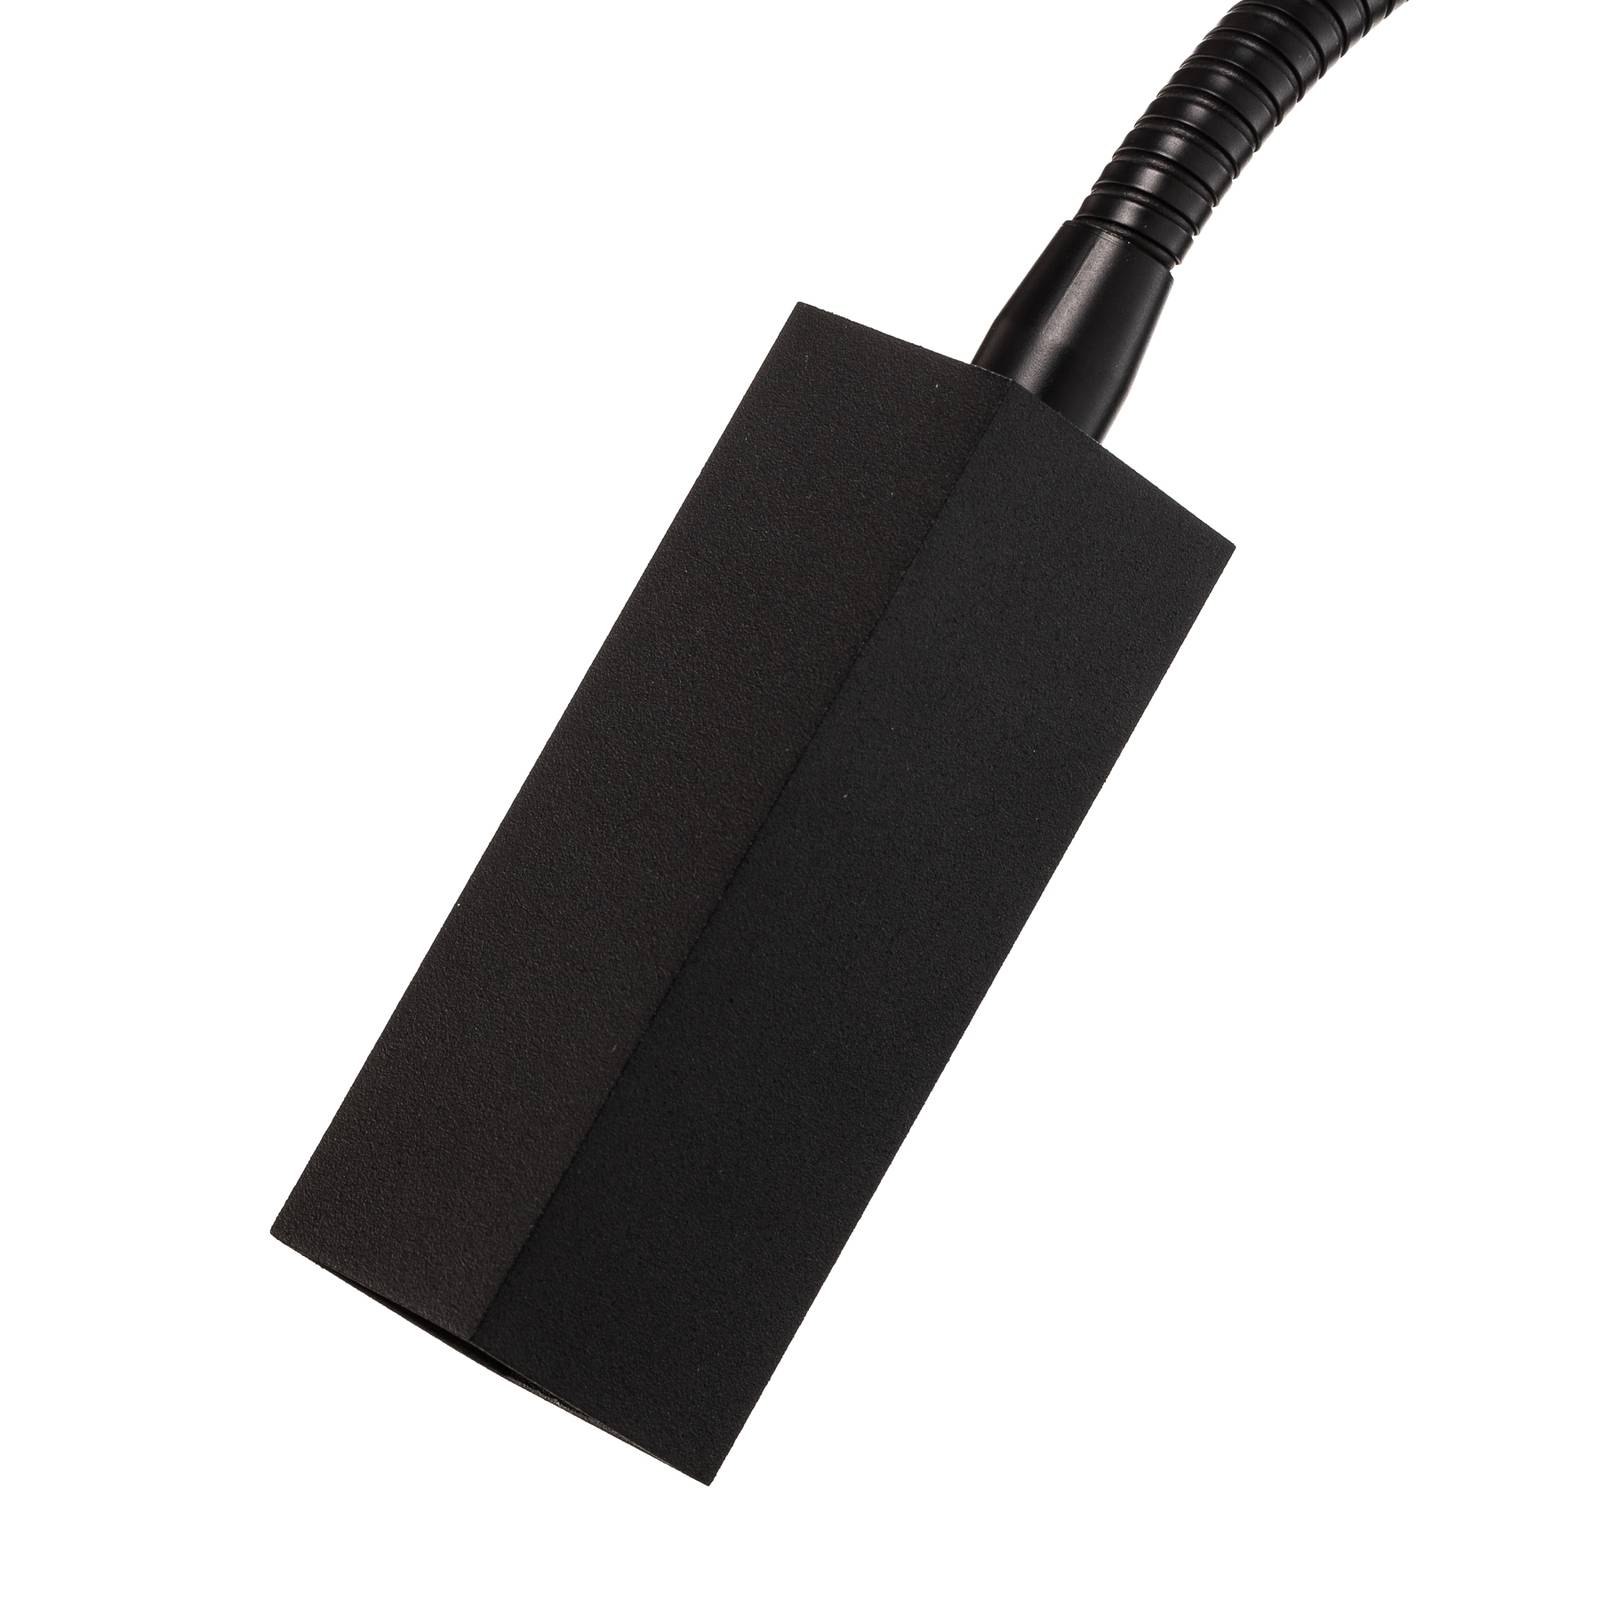 Raisio wall light, flexible arm, black